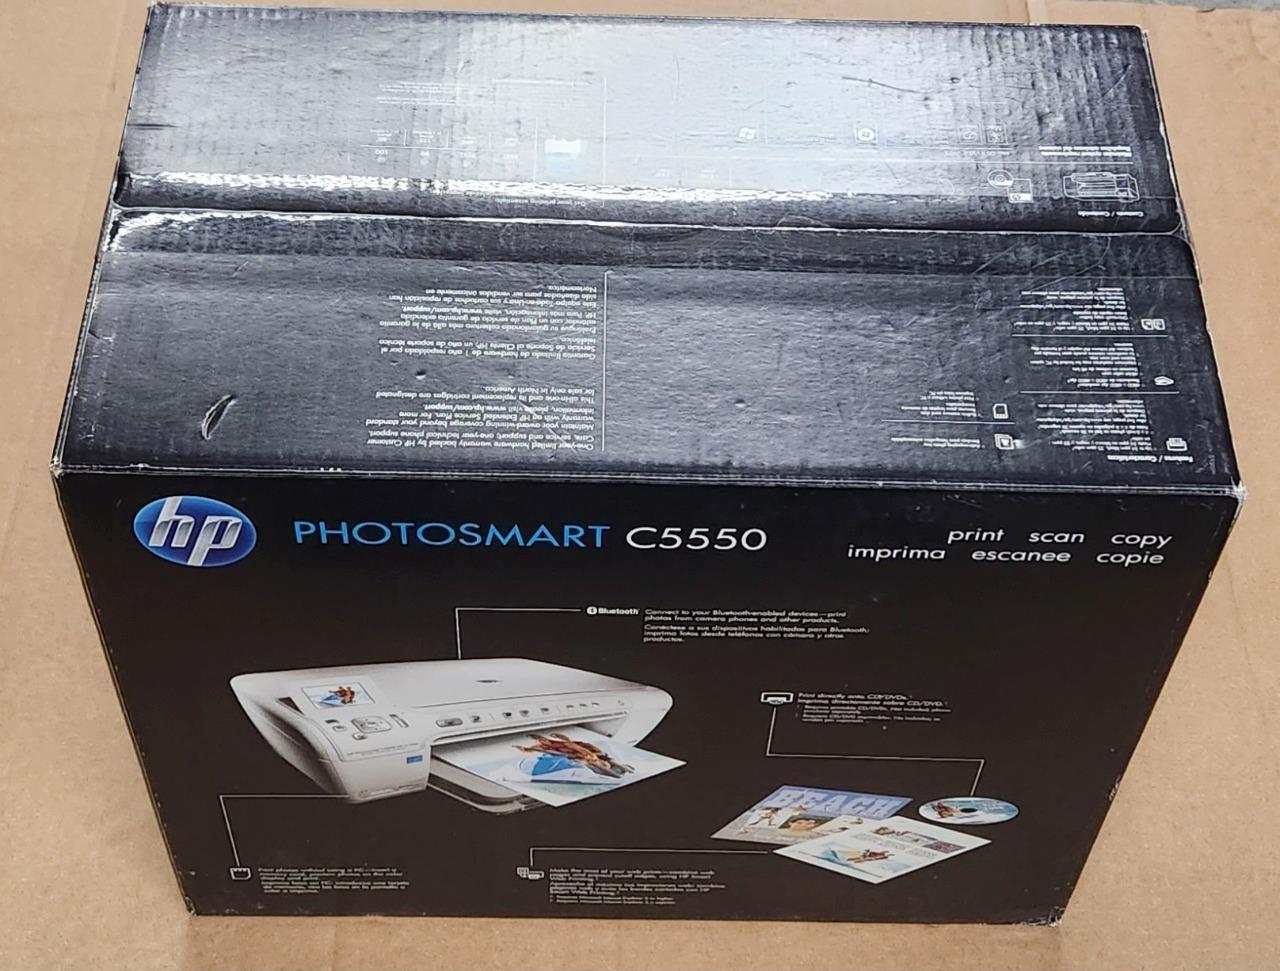 NEW HP Photosmart C5550 All-In-One Inkjet Printer NEW, SEALED BOX